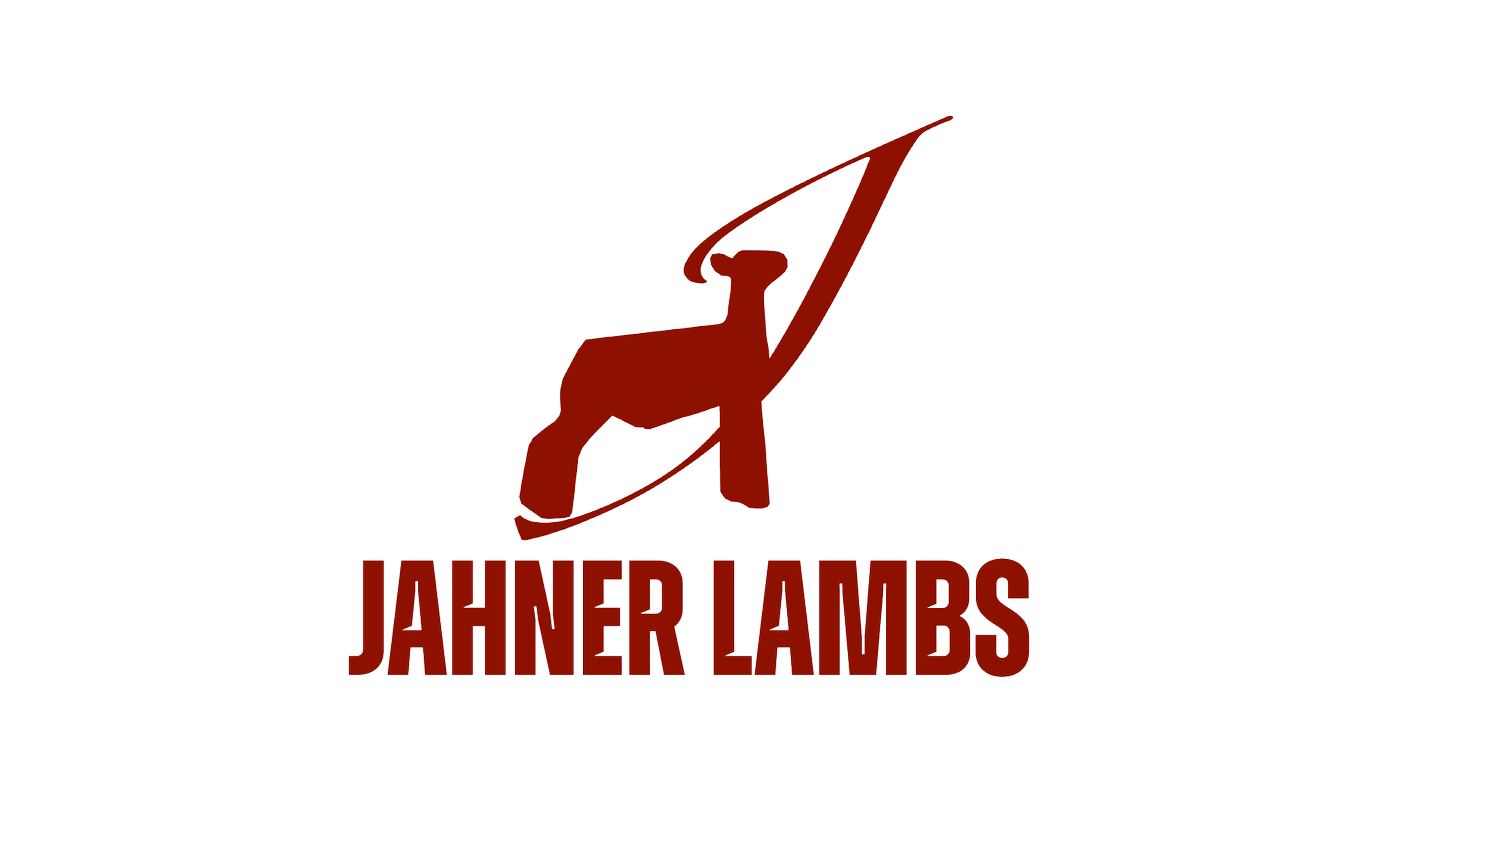 JAHNER LAMBS